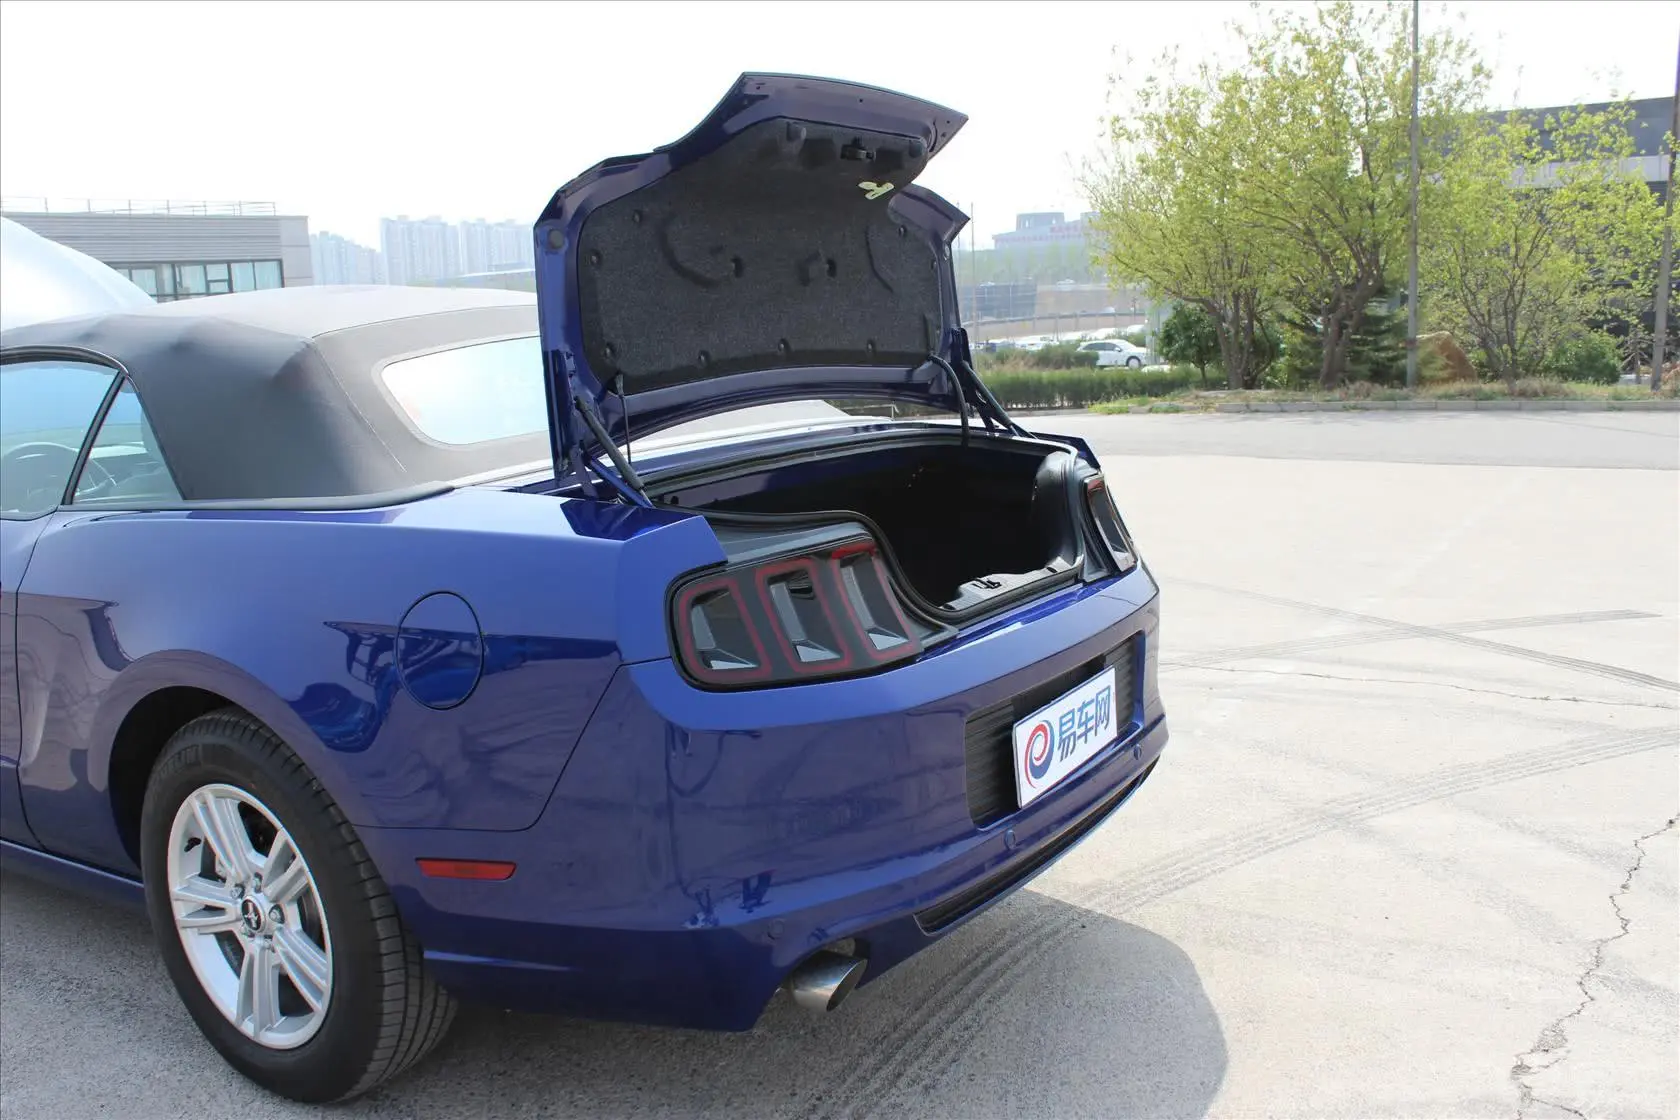 Mustang3.7L 自动 V6行李厢开口范围